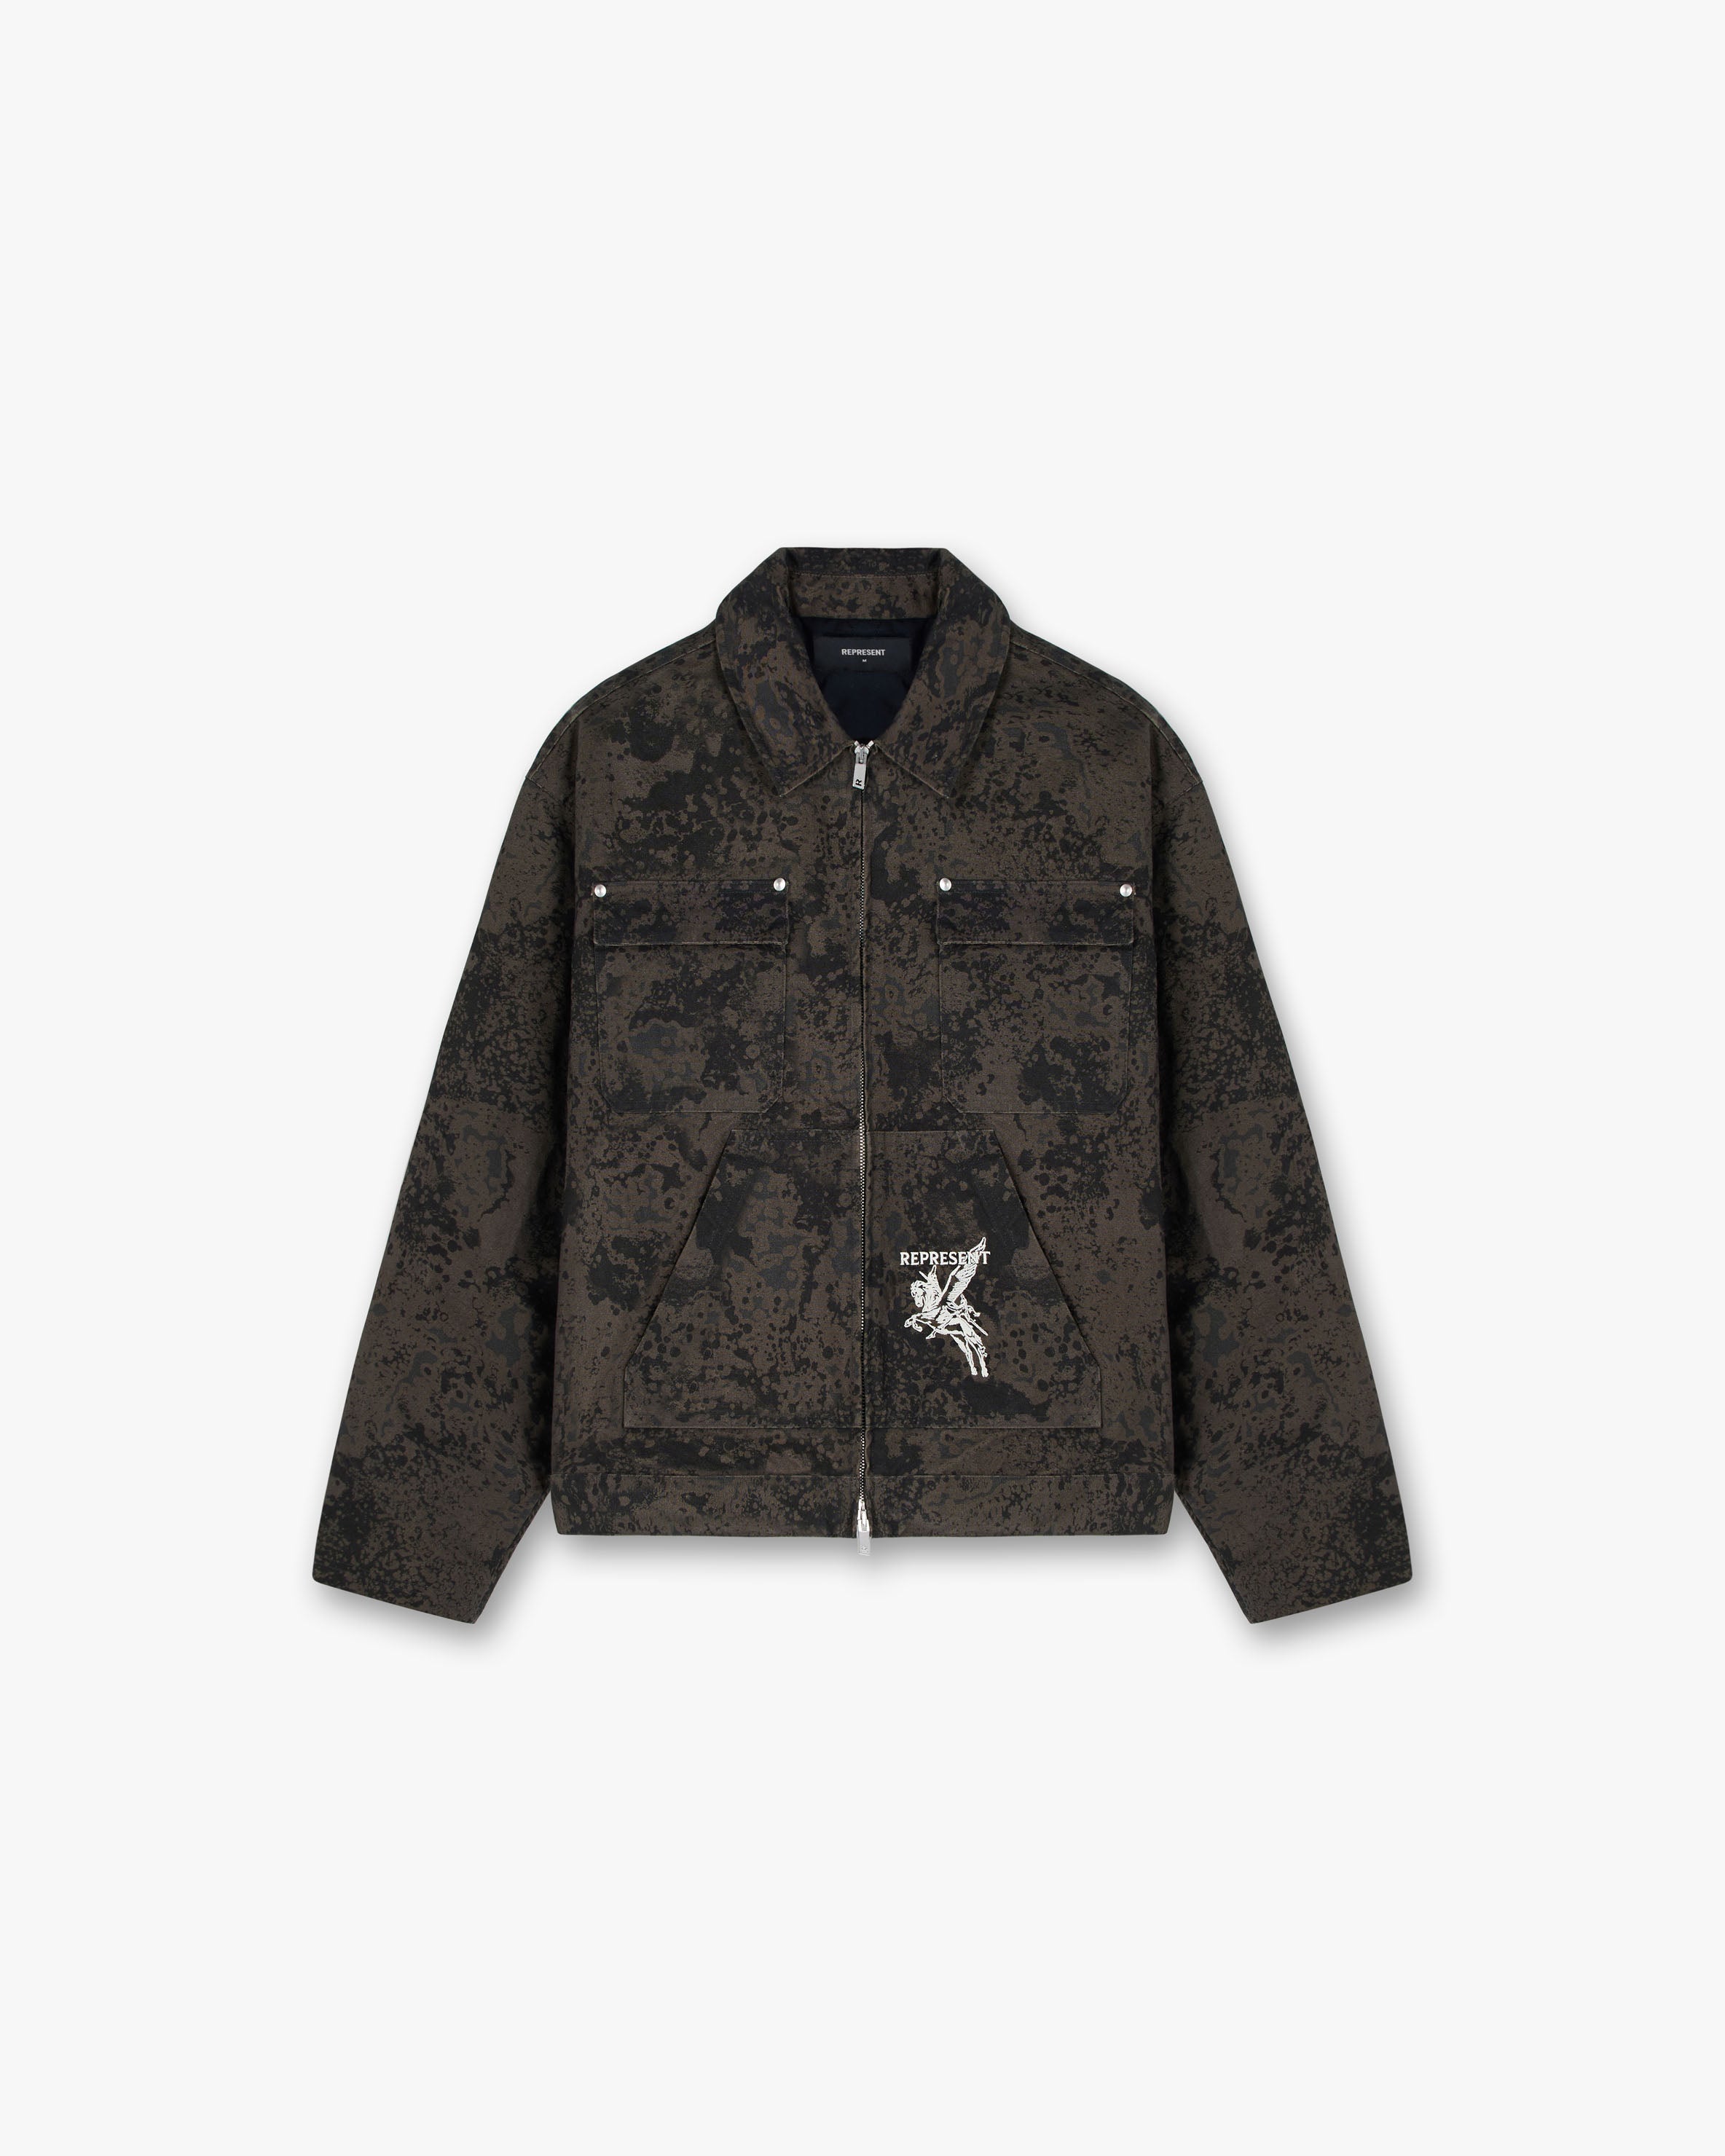 Louis Vuitton Men's XL Black x Grey Monogram Teddy Jacket Fleece